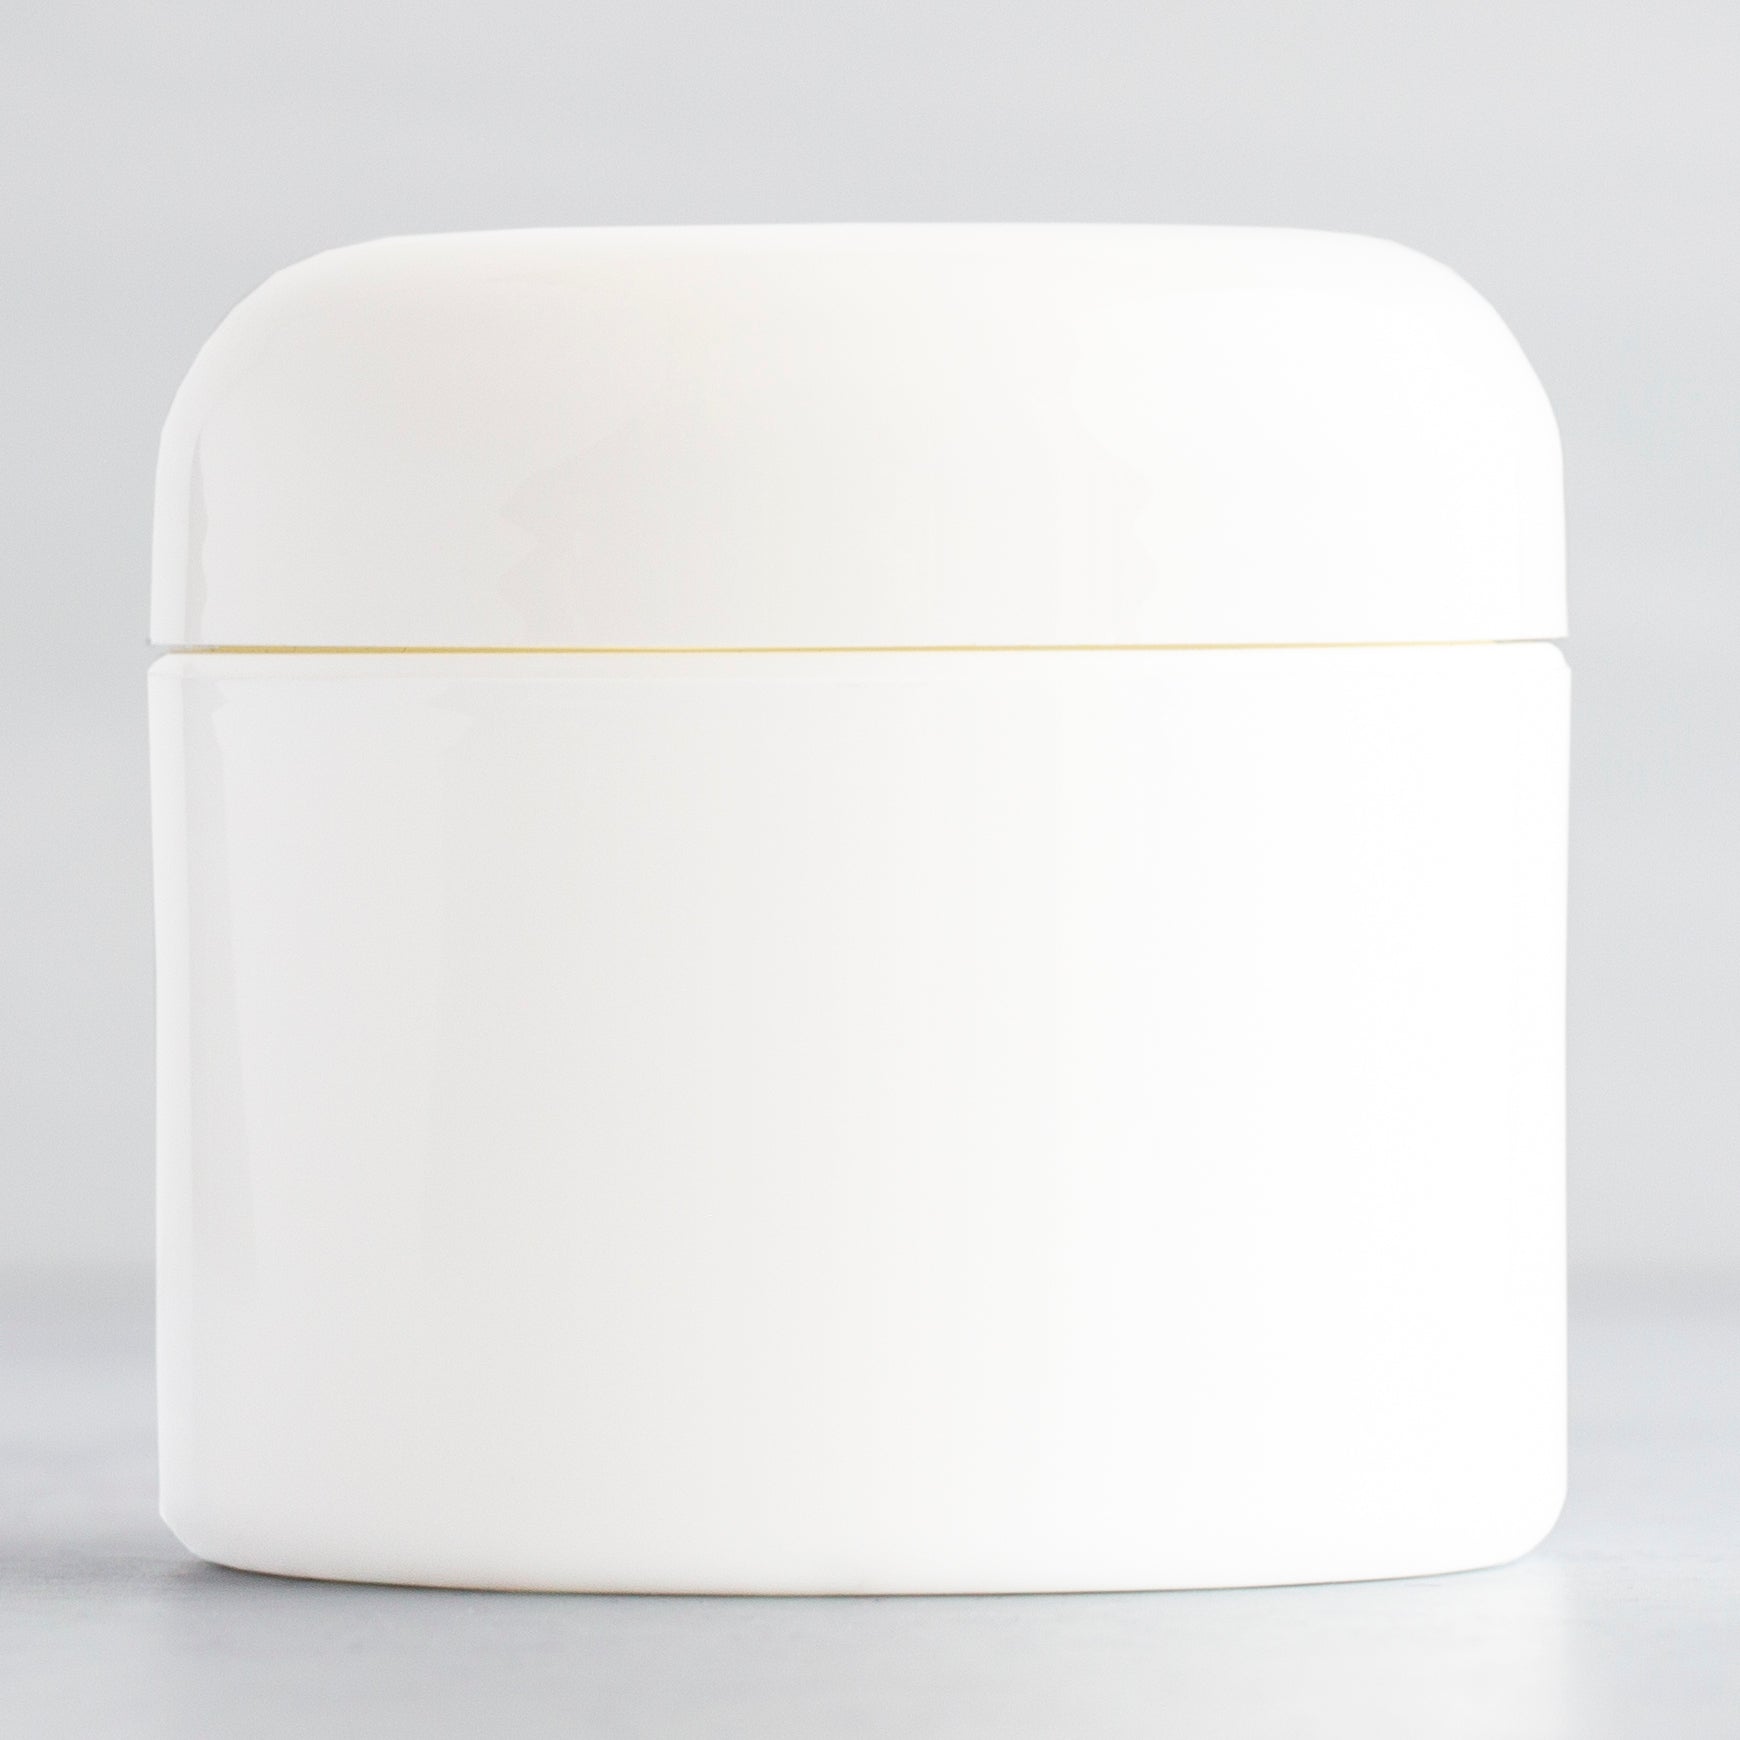 2 oz White Square Base Plastic Jar with White Dome Cap